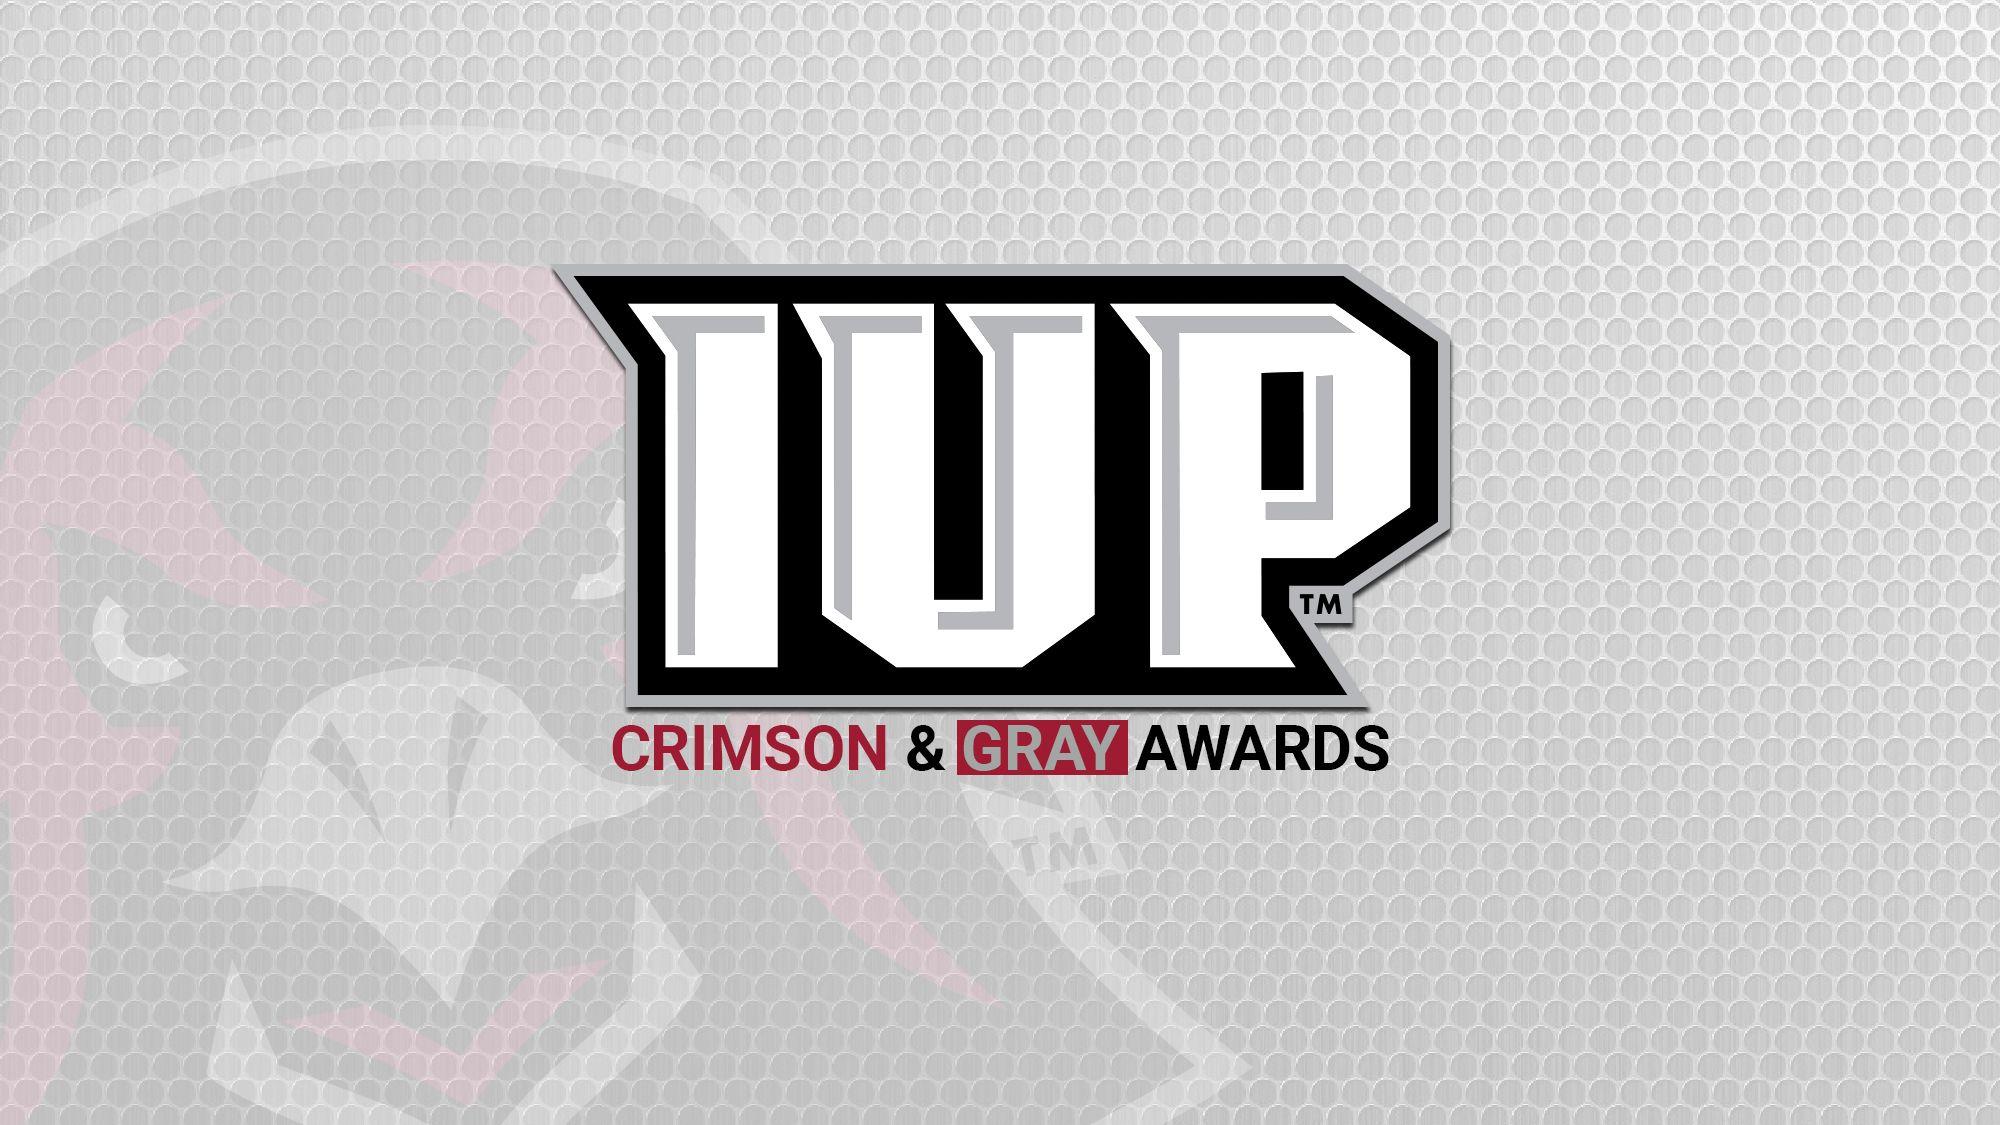 IUP Logo - nominees announced for inaugural Crimson & Gray Awards